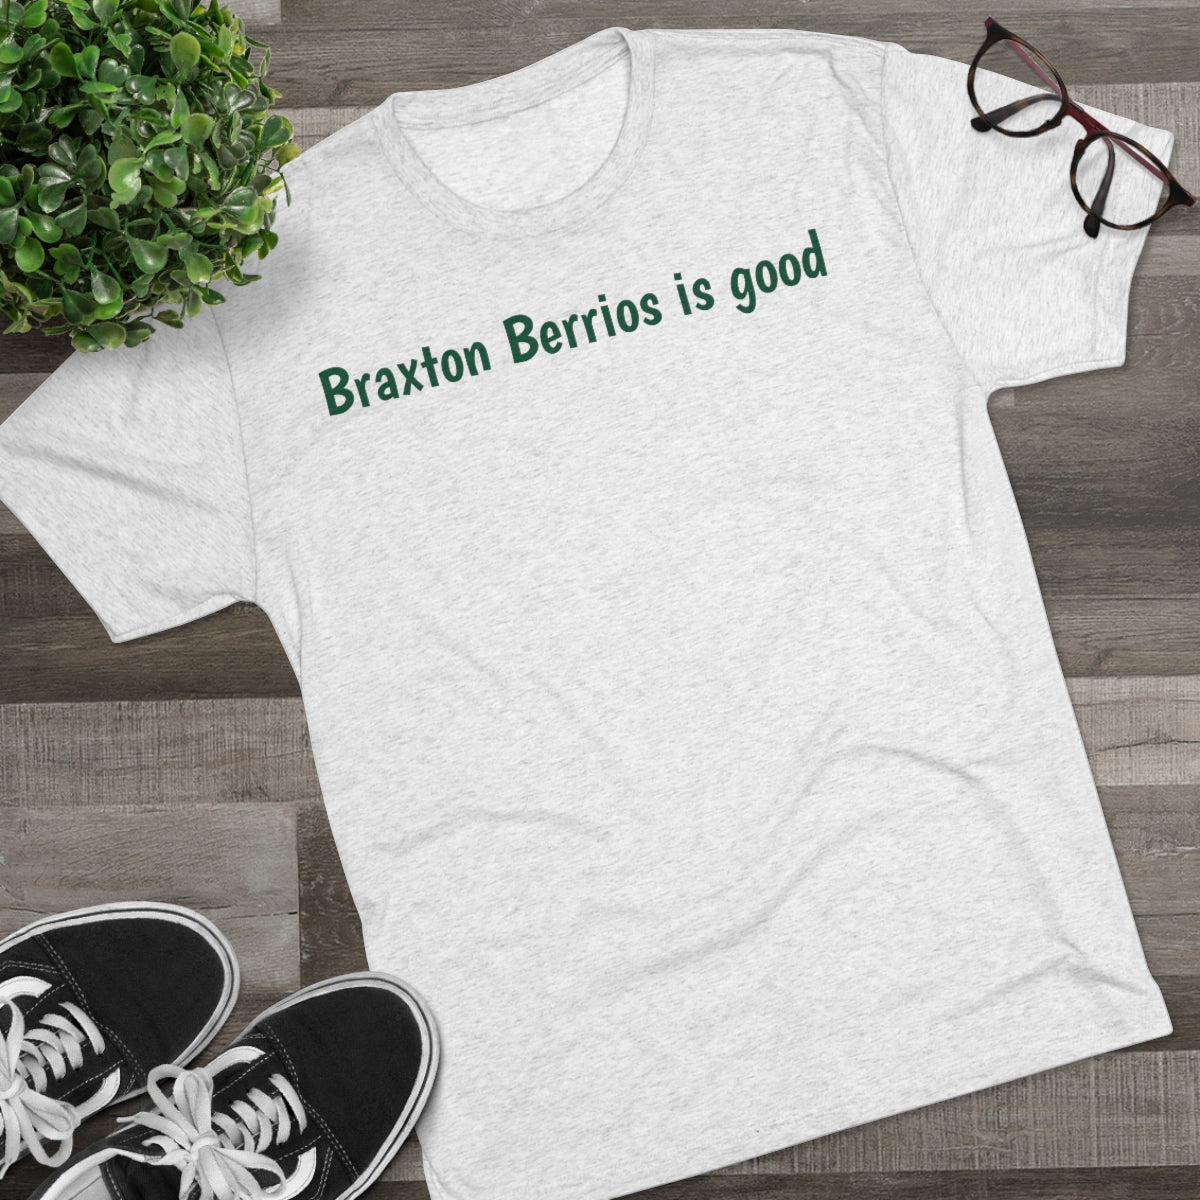 Braxton Berrios is good T-Shirt - IsGoodBrand